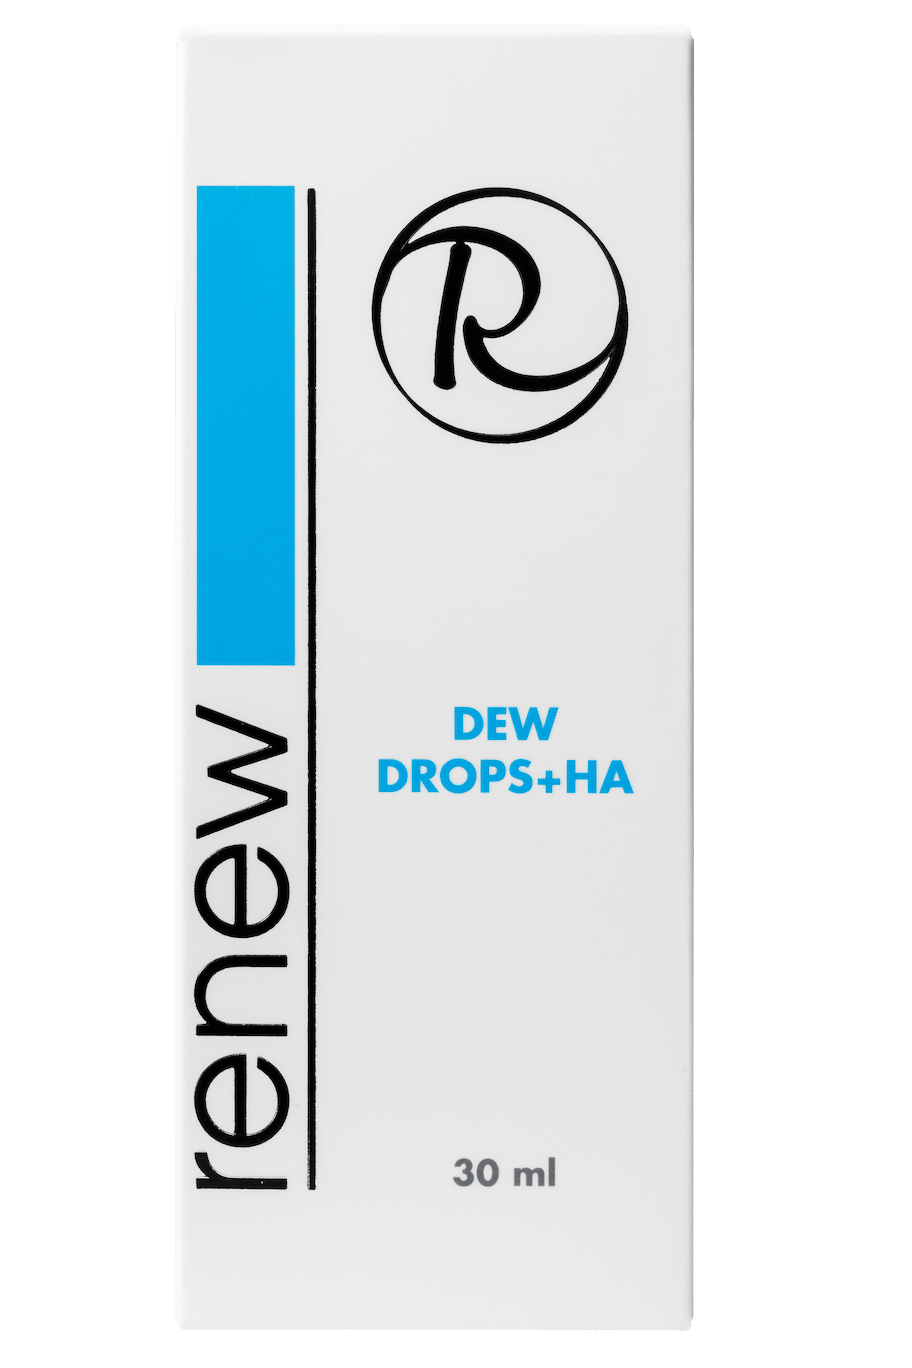 dew-drops-ha-30-ml-box